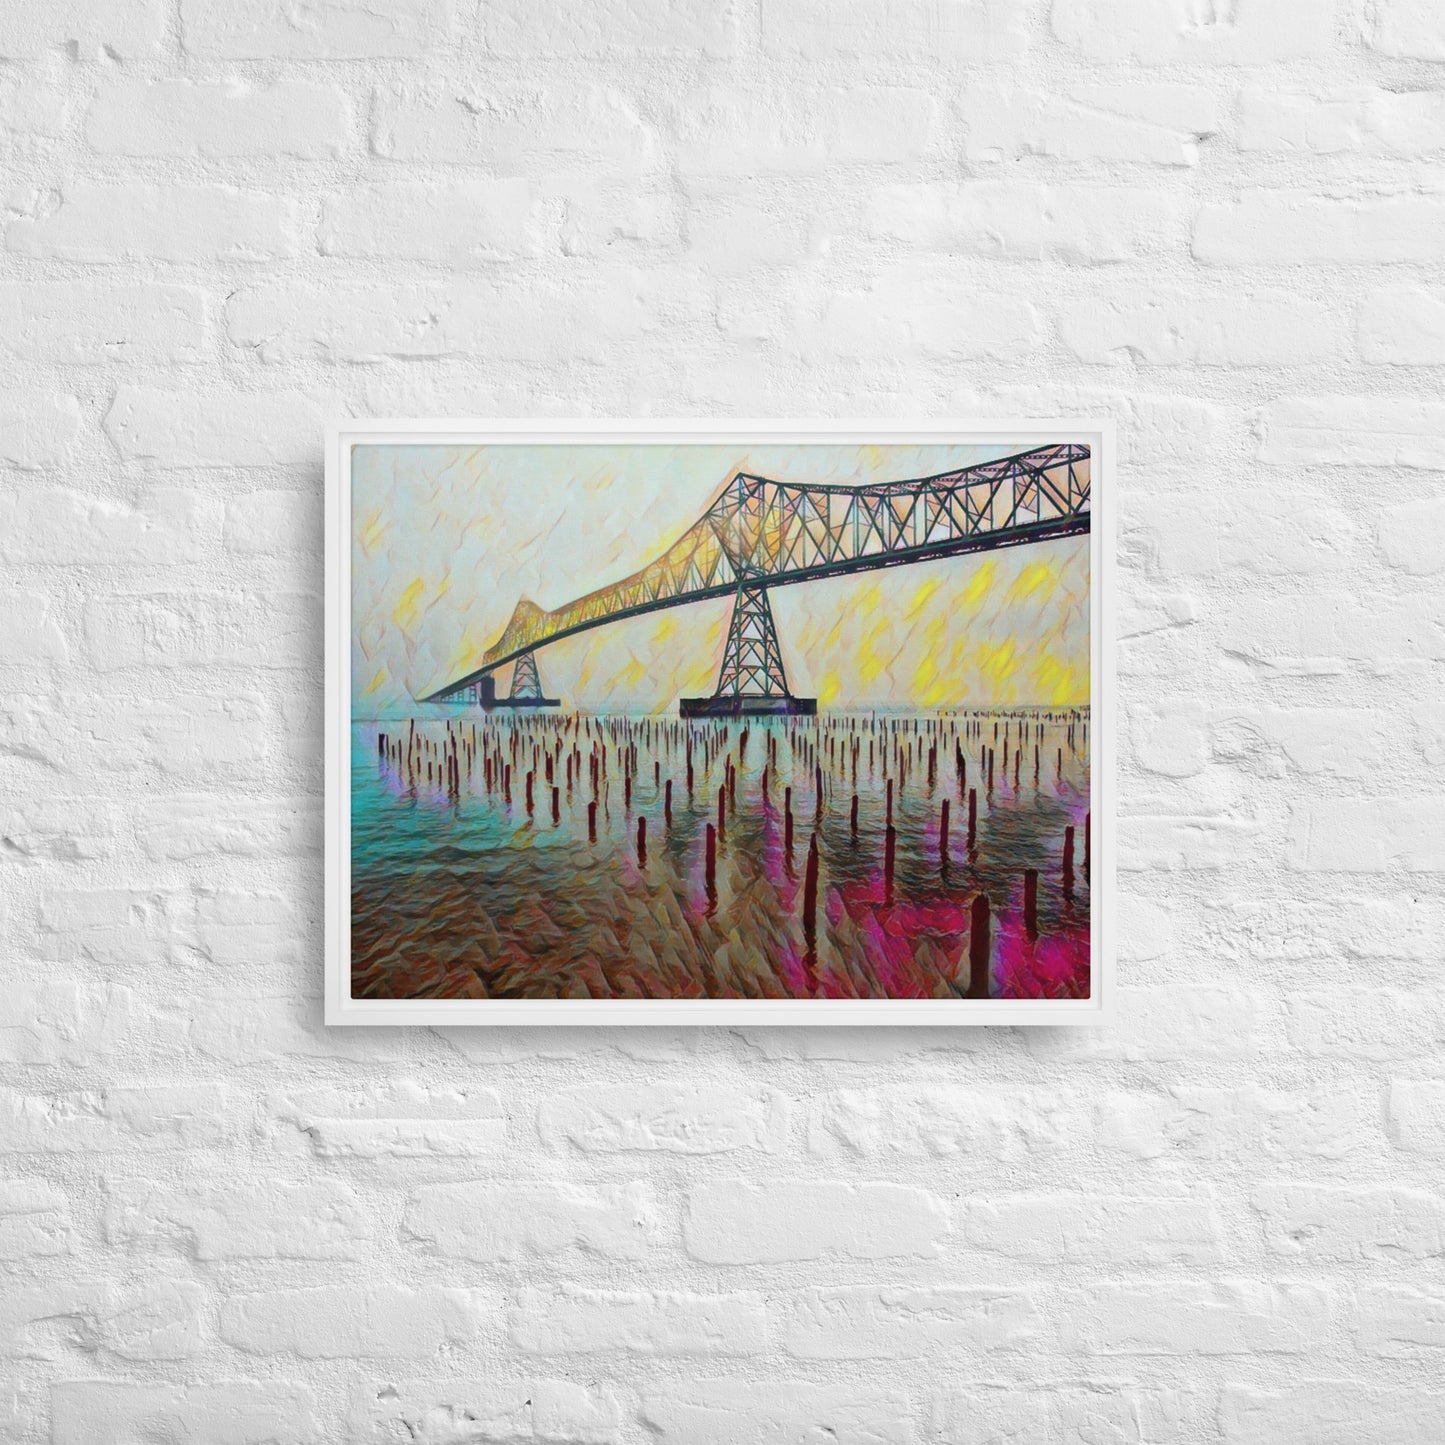 Astoria Bridge - Digital Art - Framed canvas - FREE SHIPPING